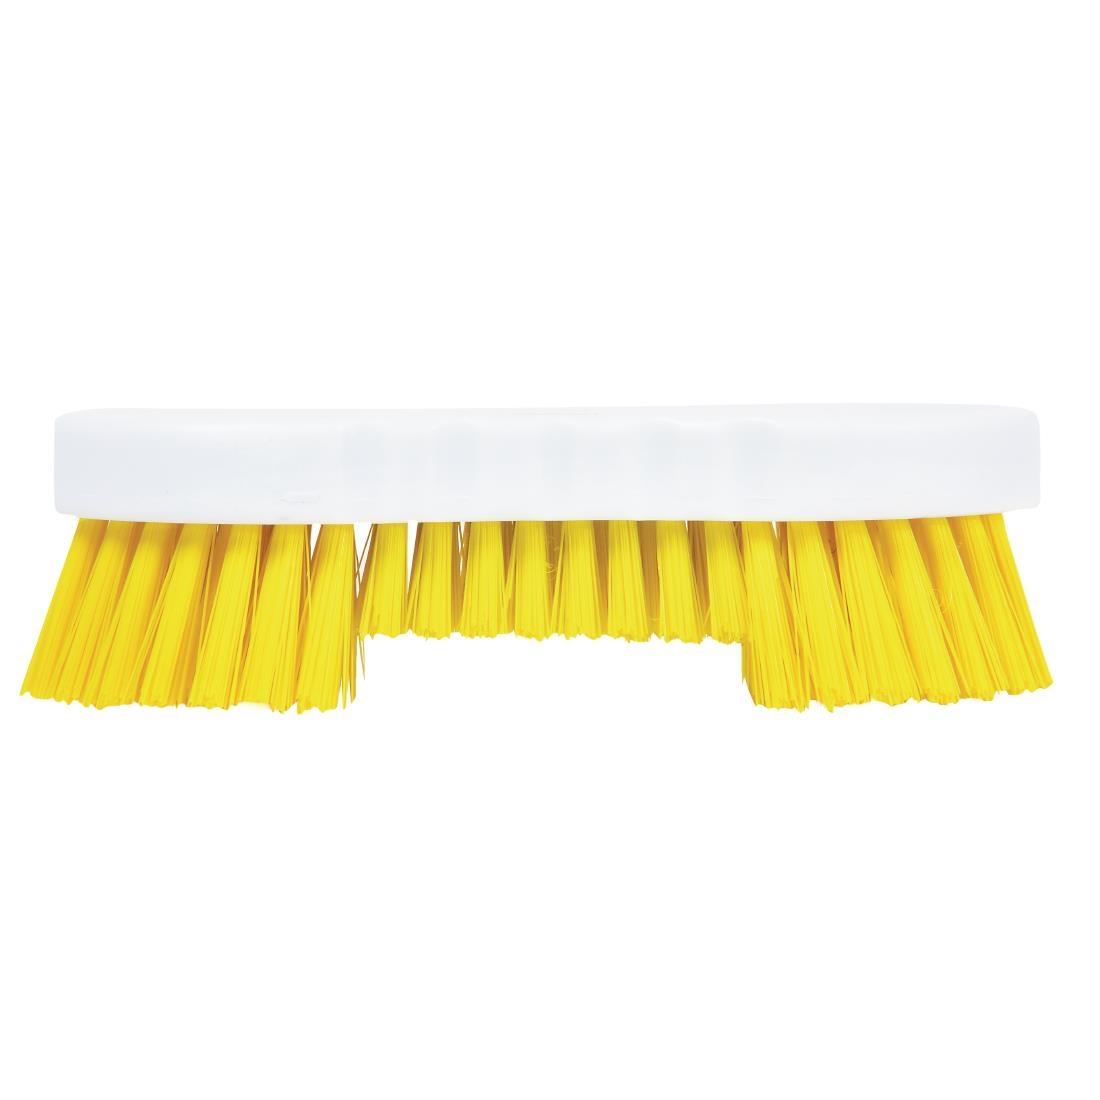 Jantex Scrub Brush Yellow - L723  - 2